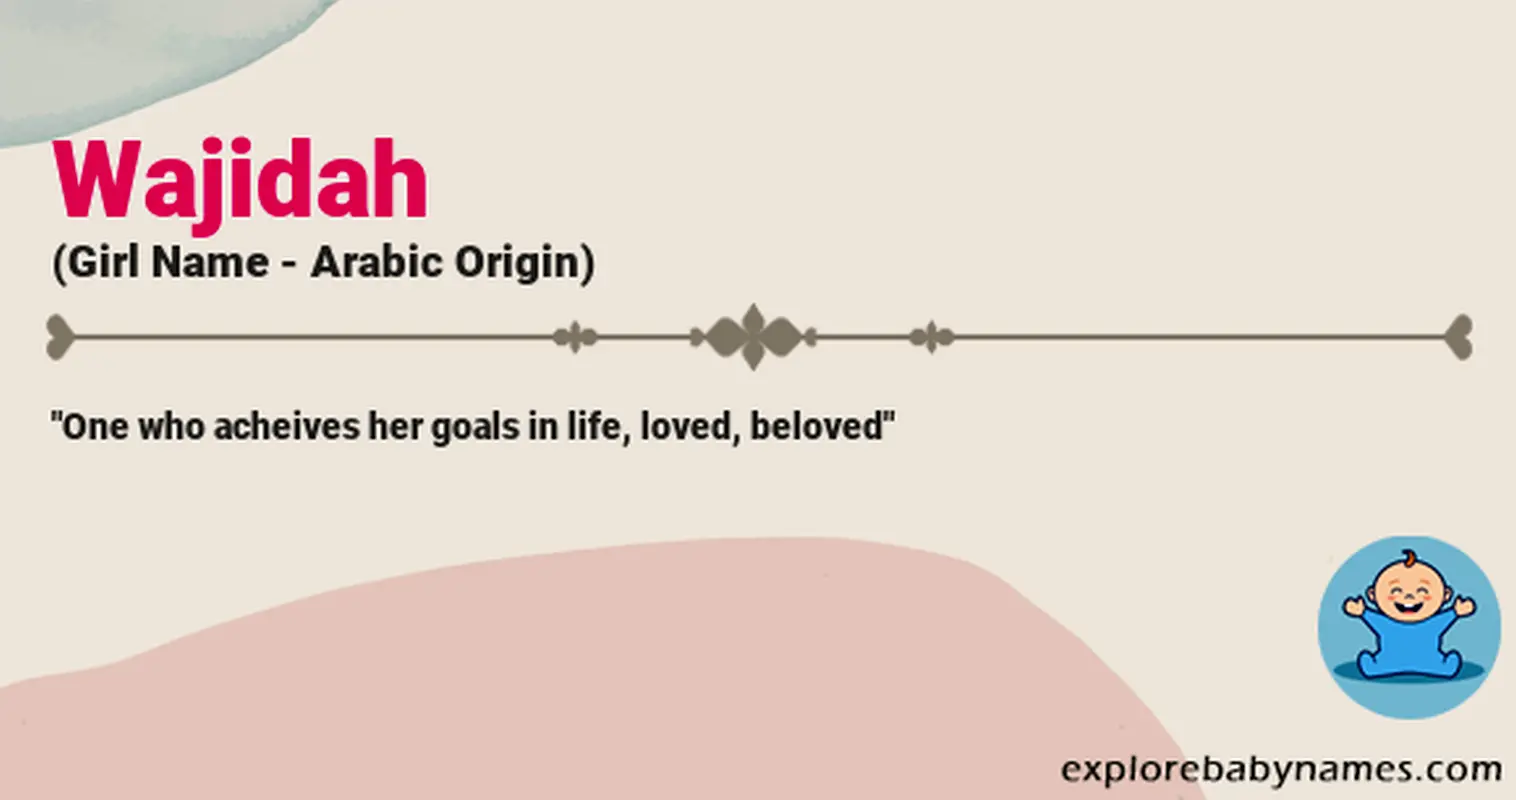 Meaning of Wajidah